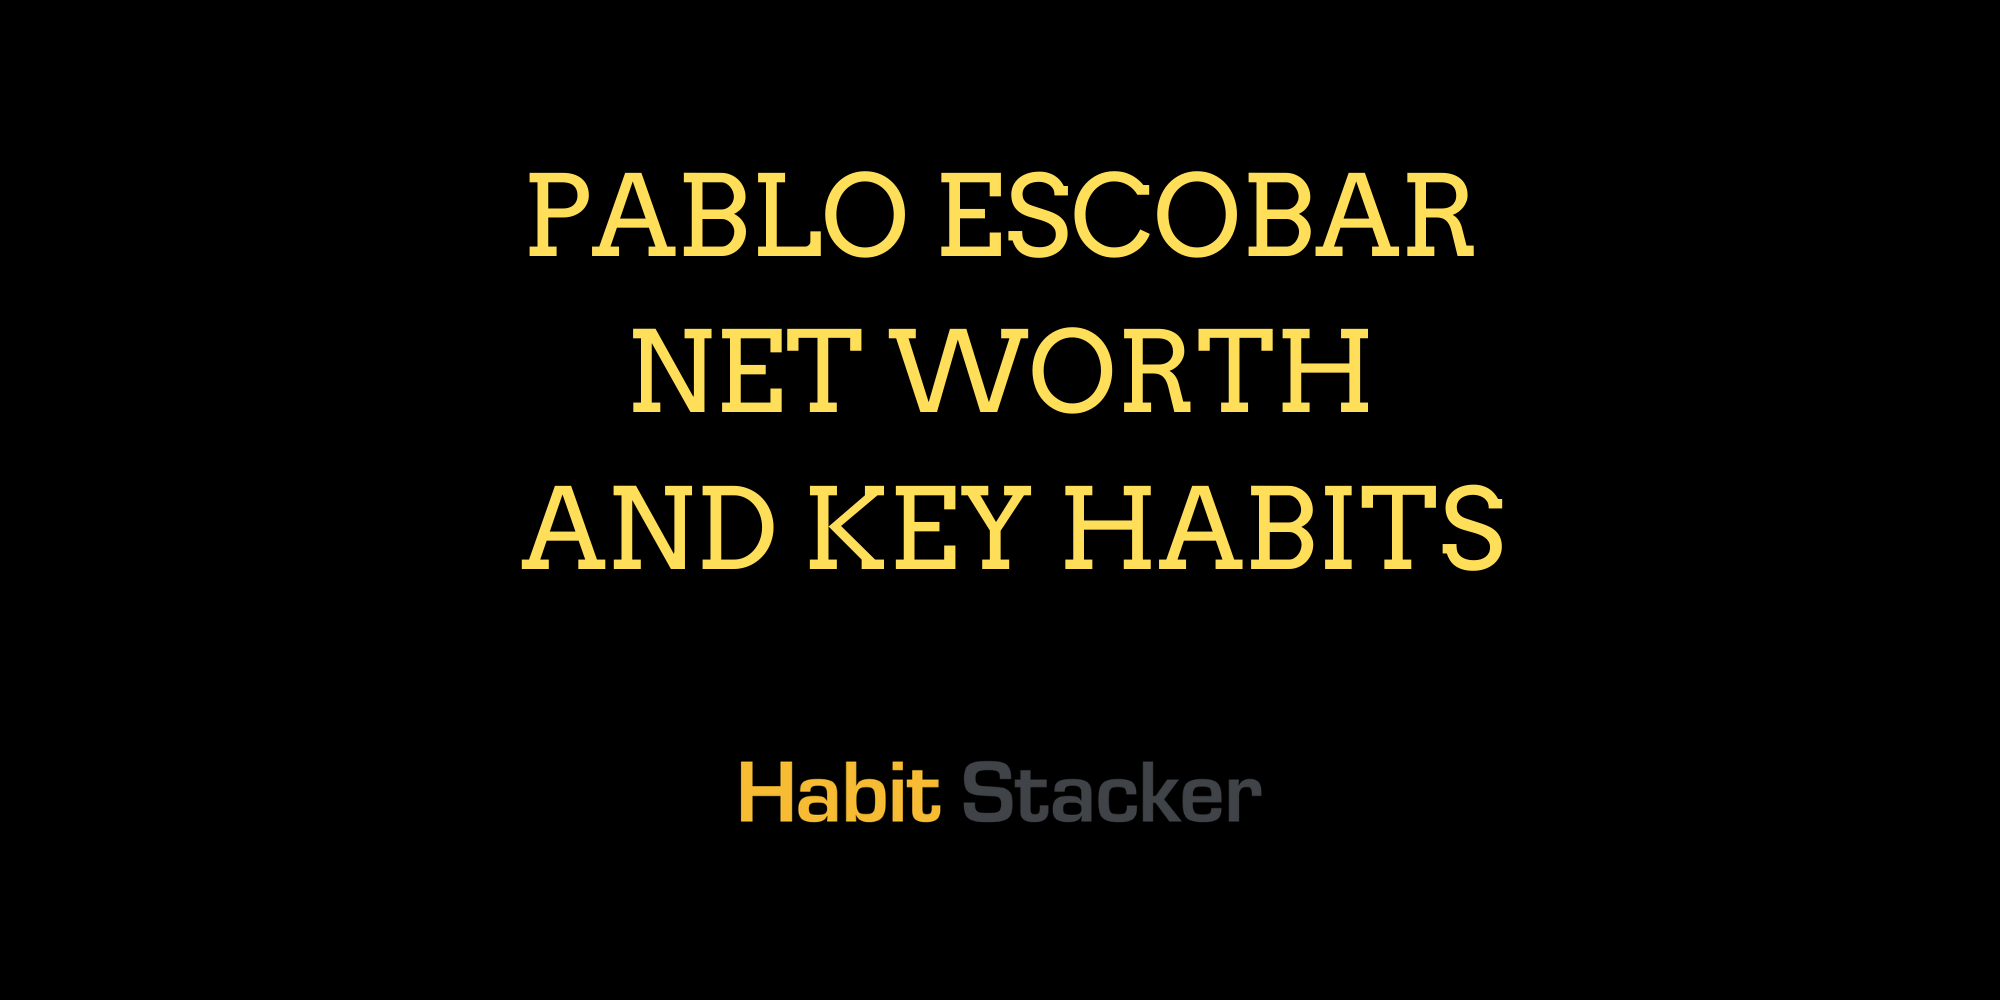 Pablo Escobar Net Worth and Key Habits